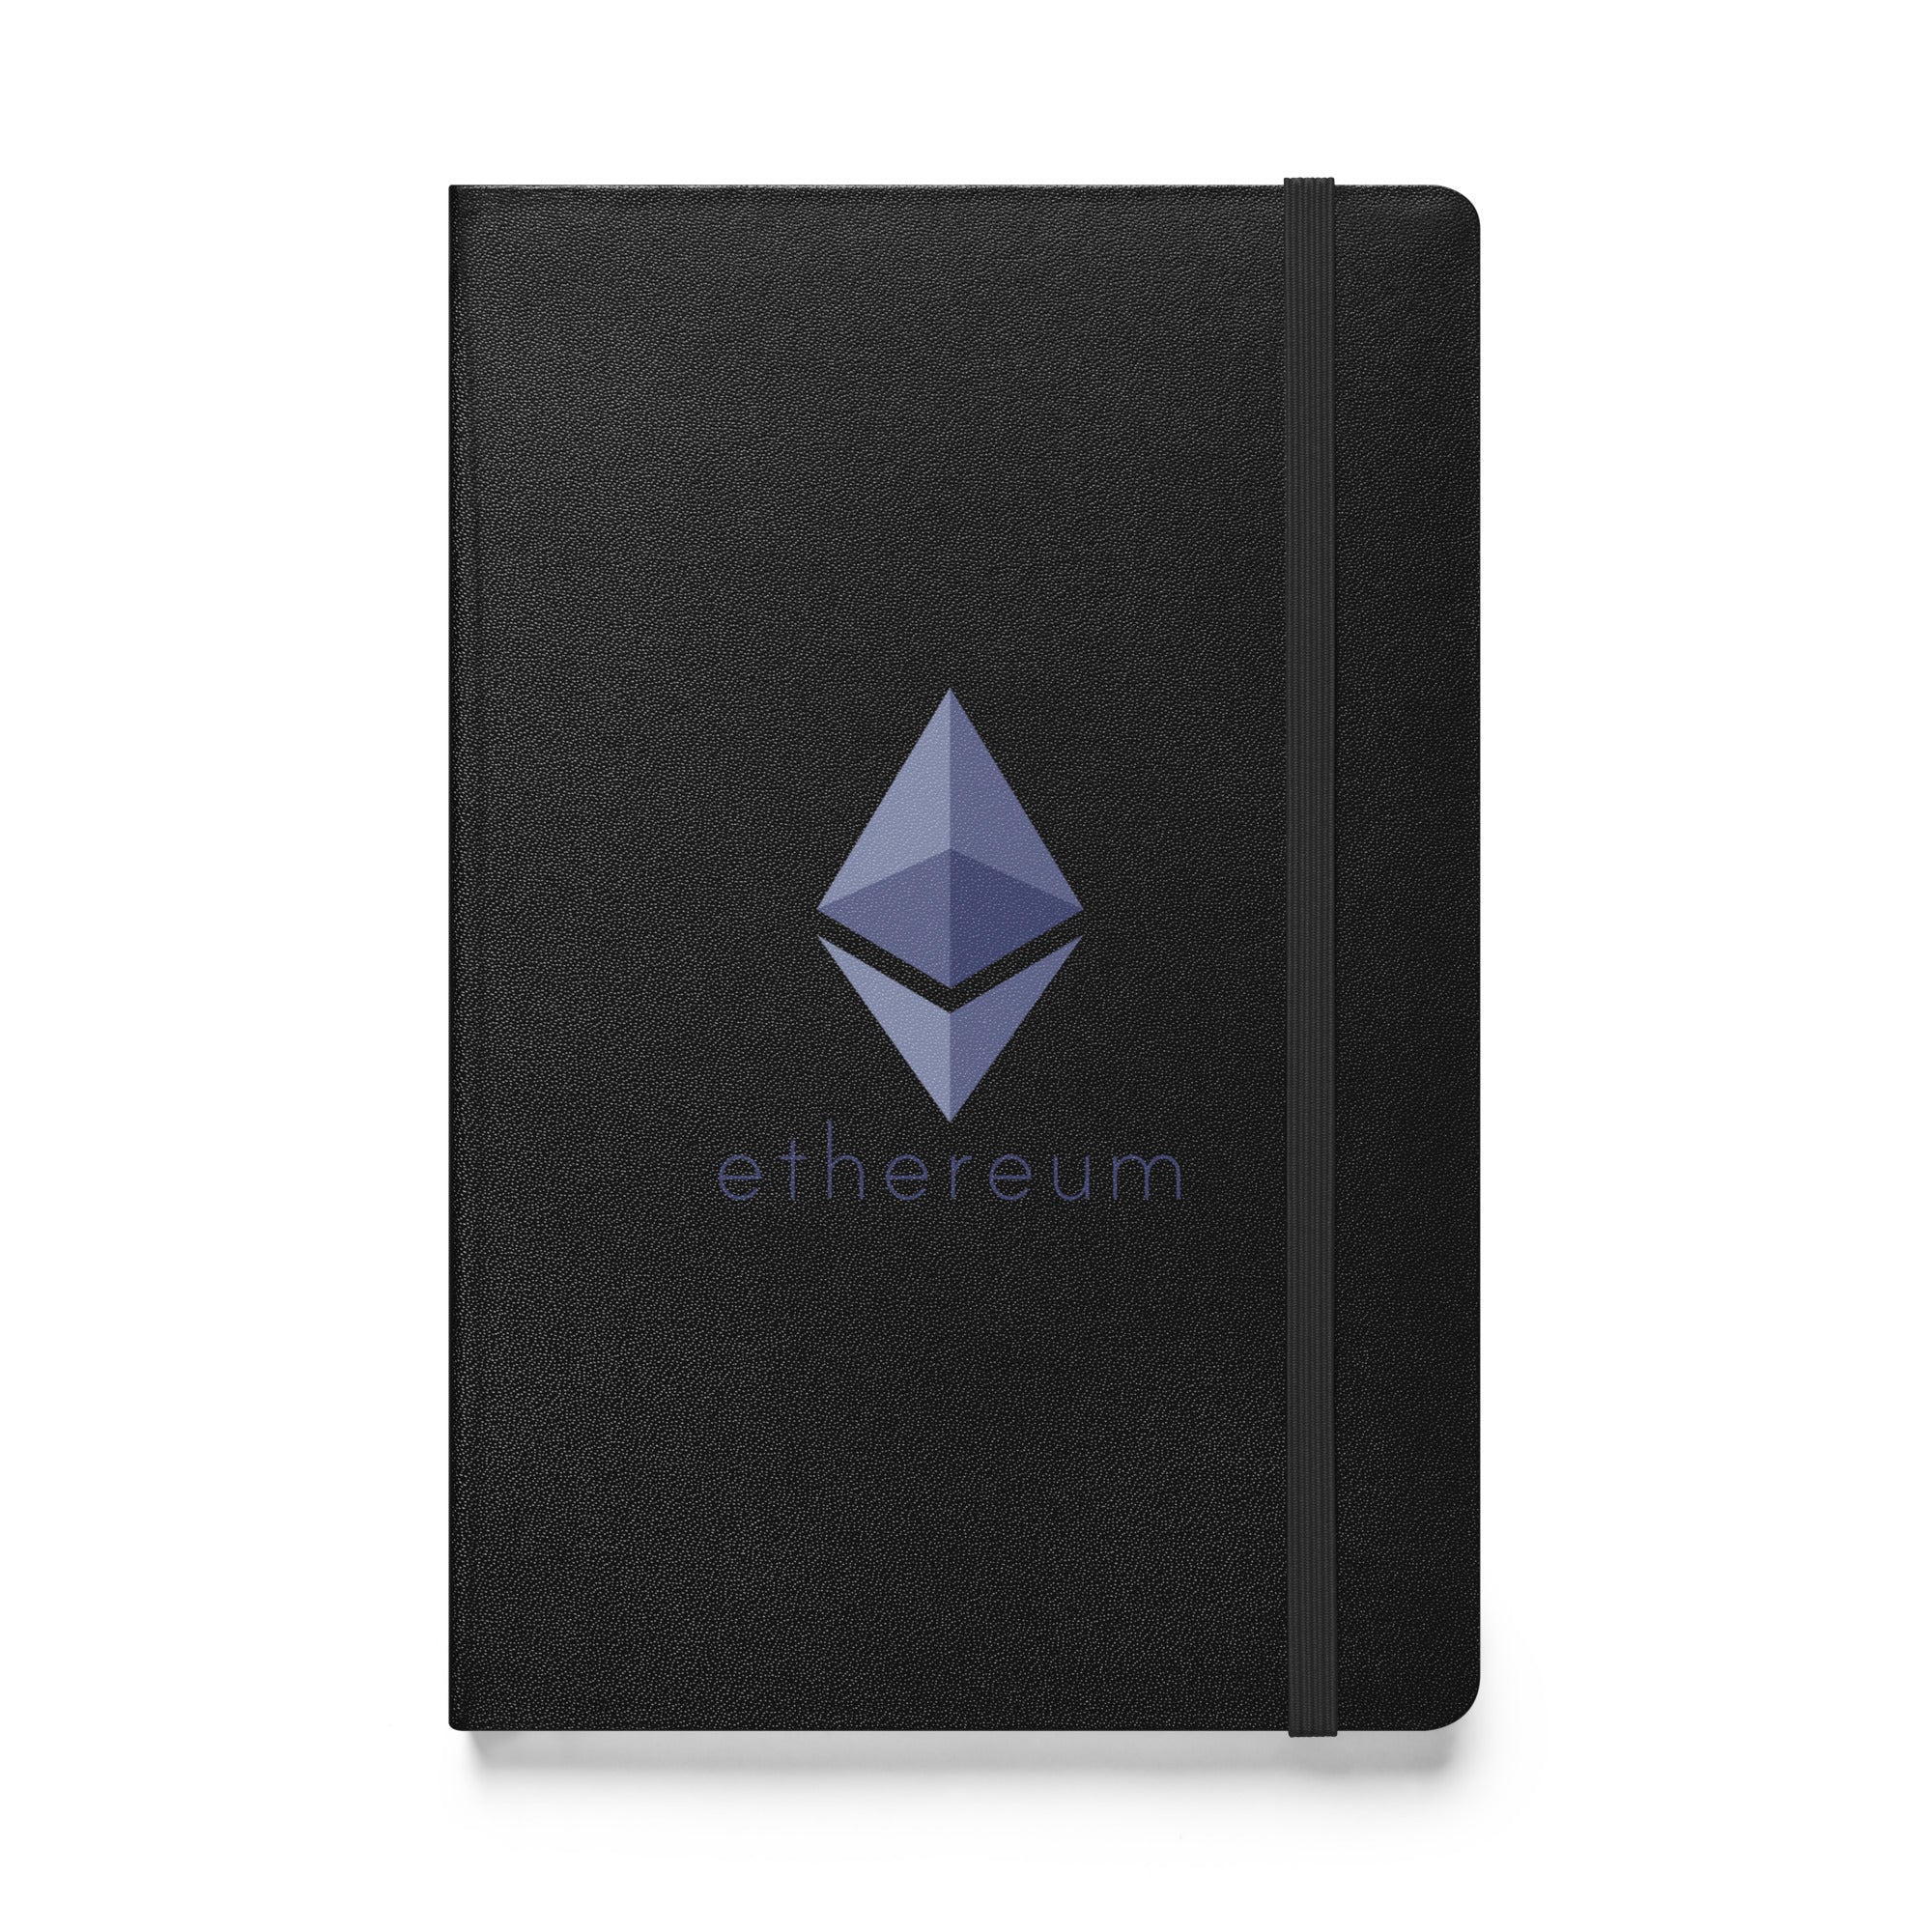 Ethereum Hardcover bound notebook